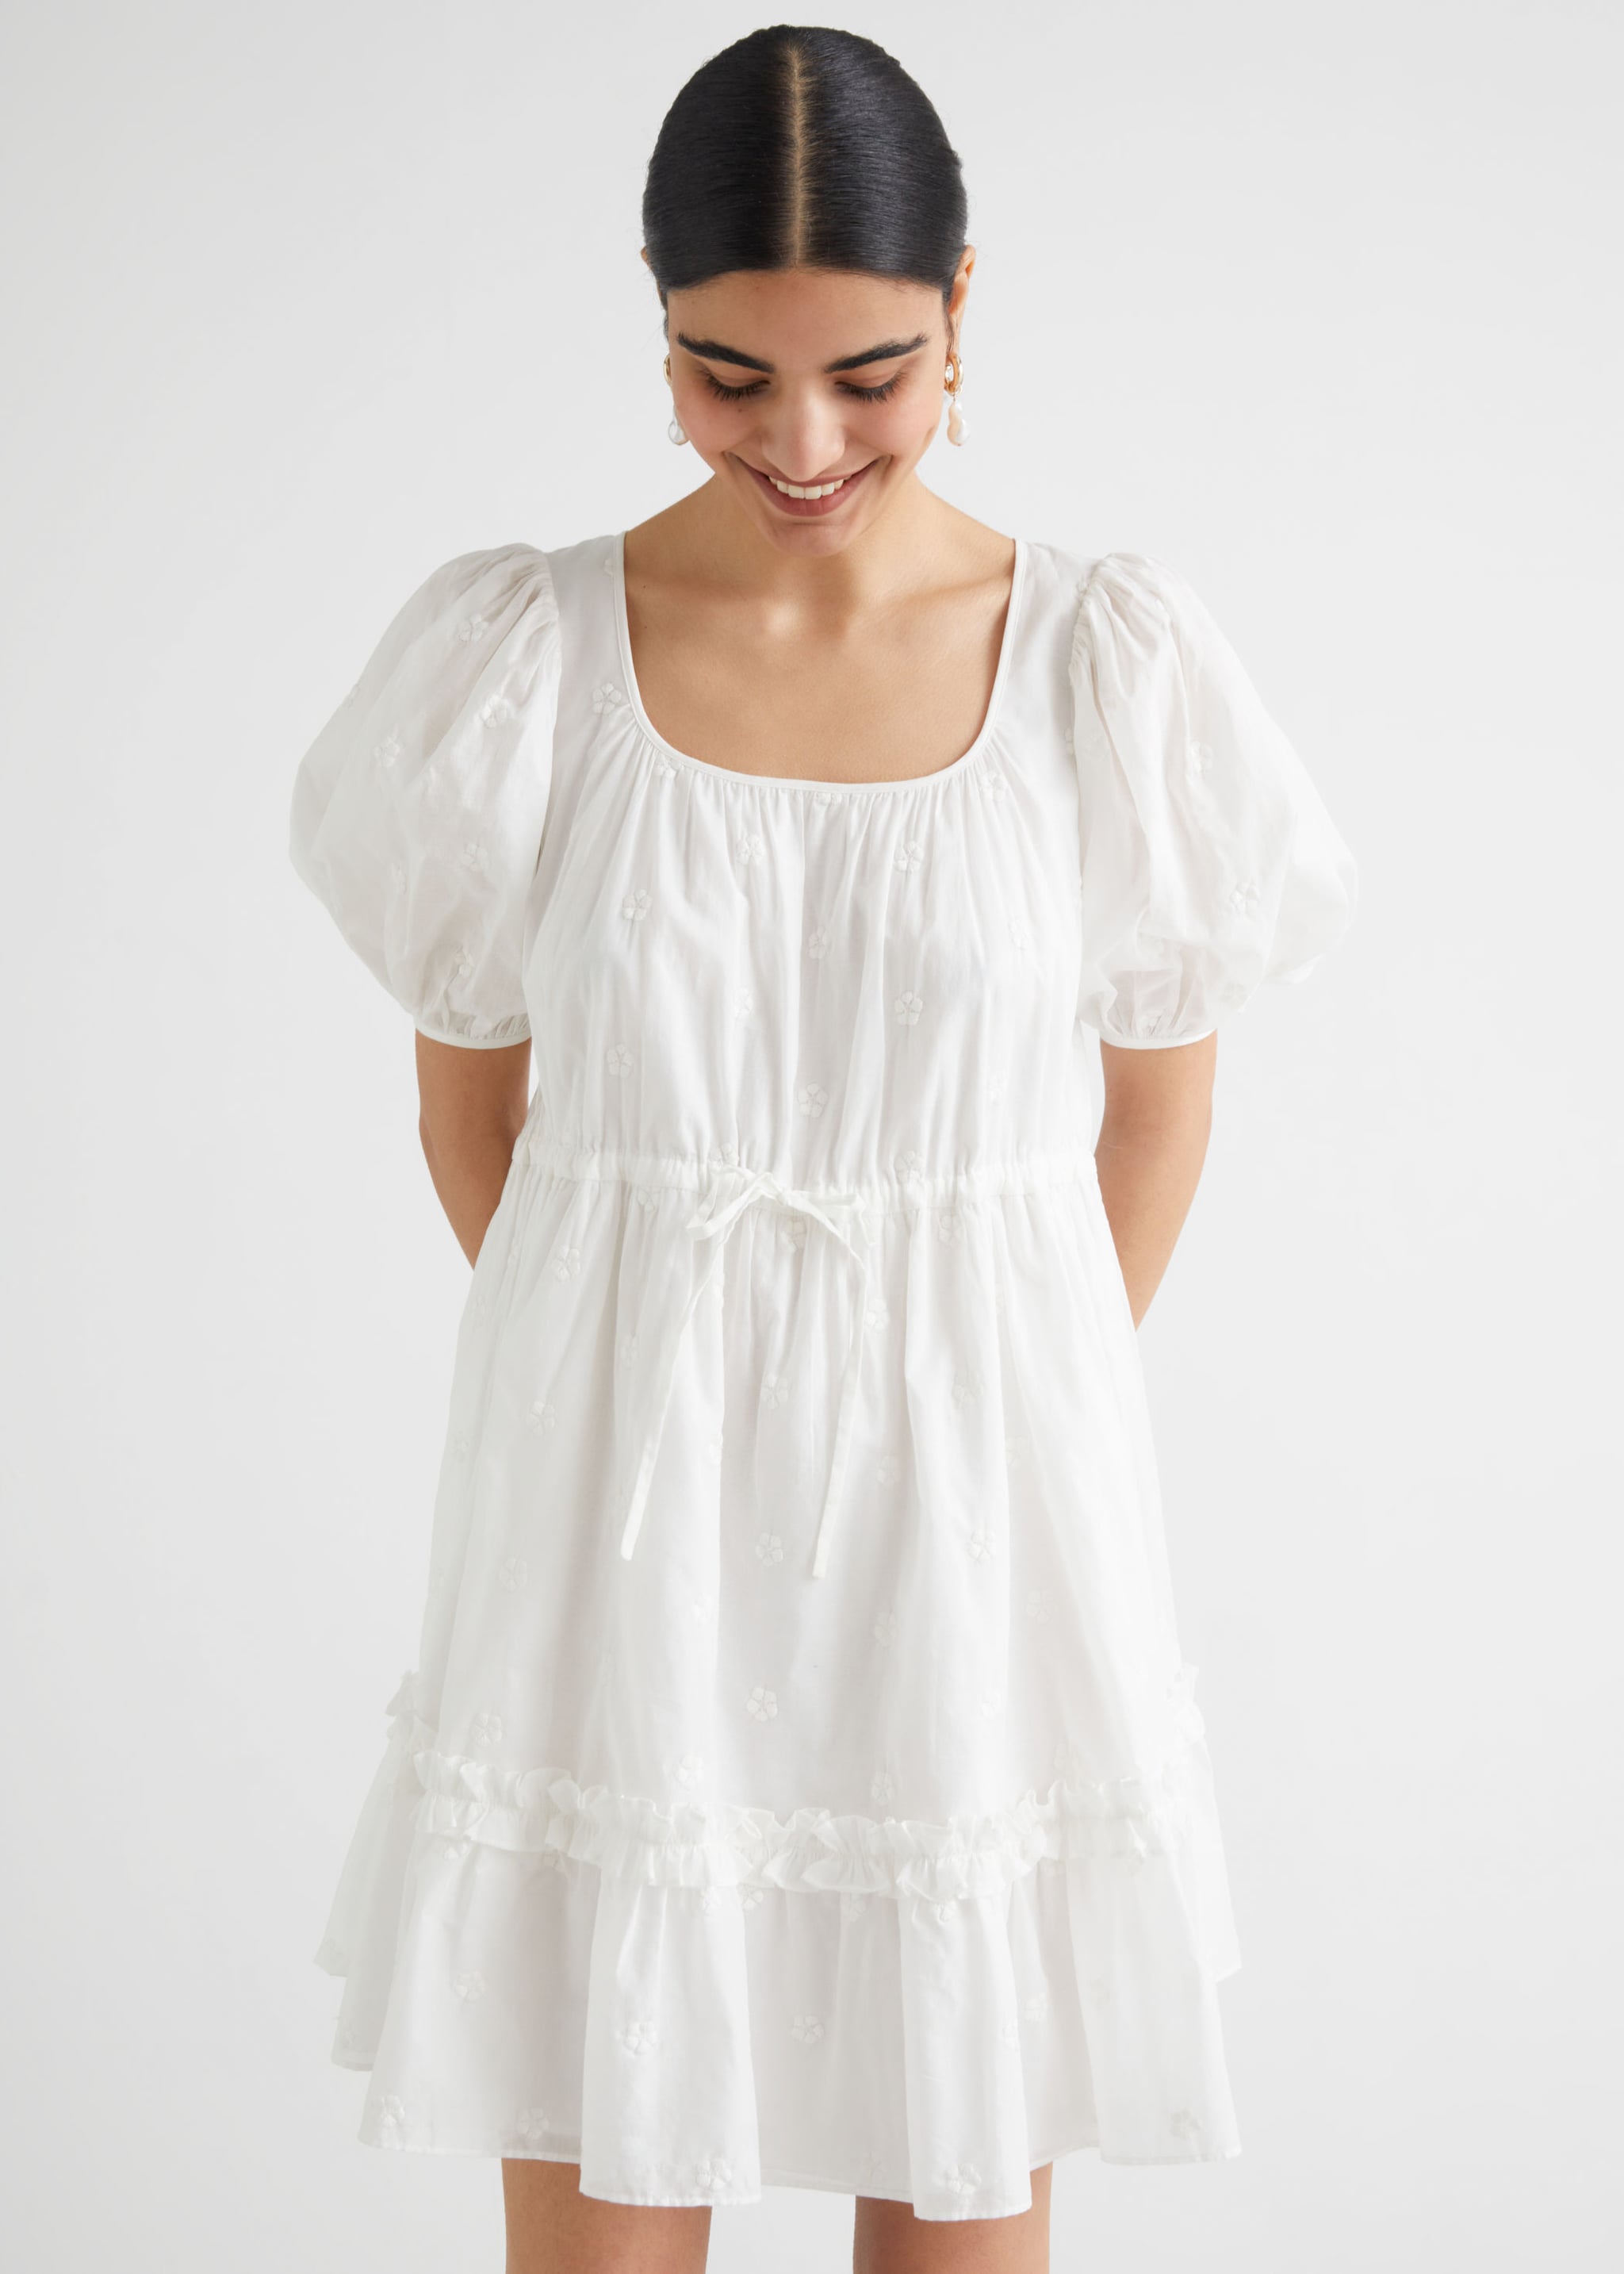 The Best White Cotton Summer Dresses ...